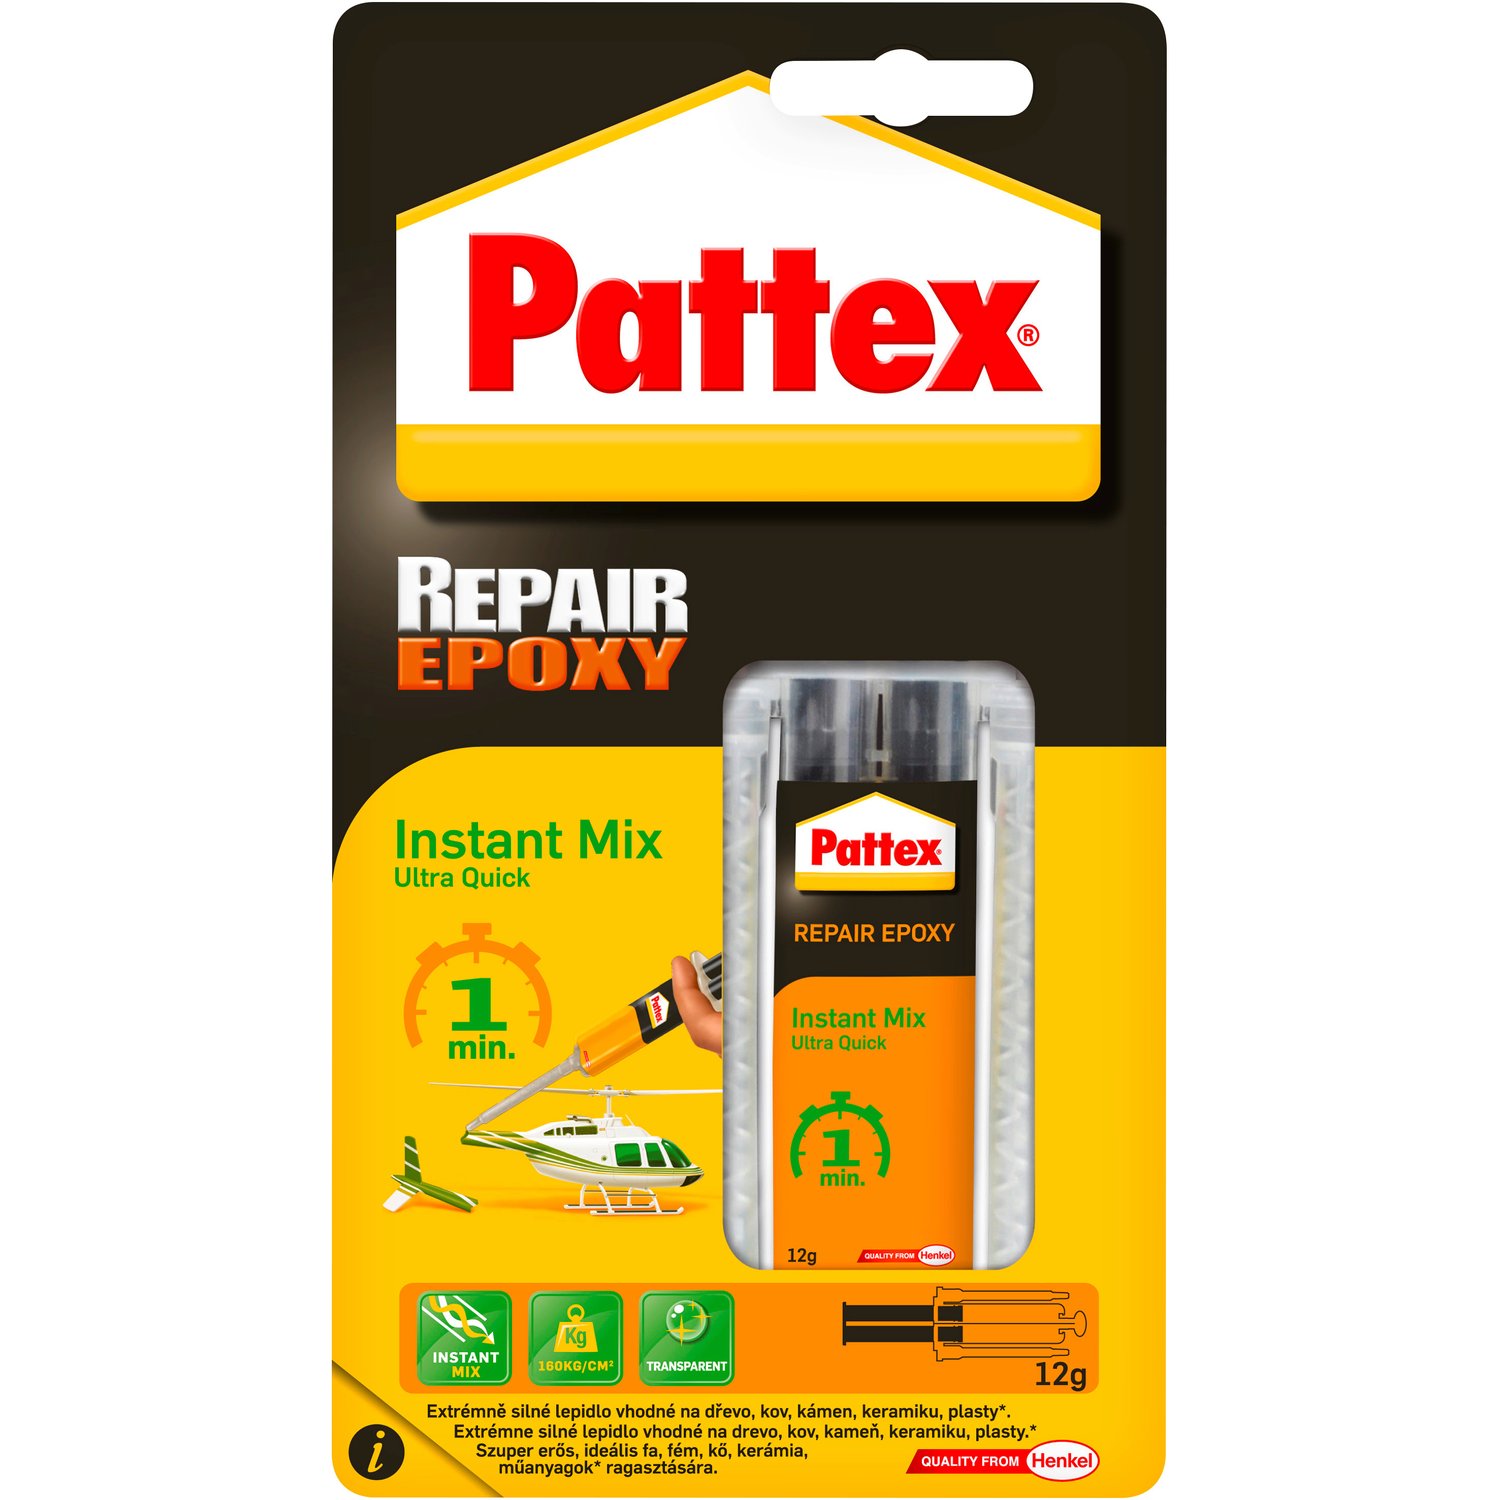 HENKEL Pattex Repair Epoxy Ultra Quick 1 min.